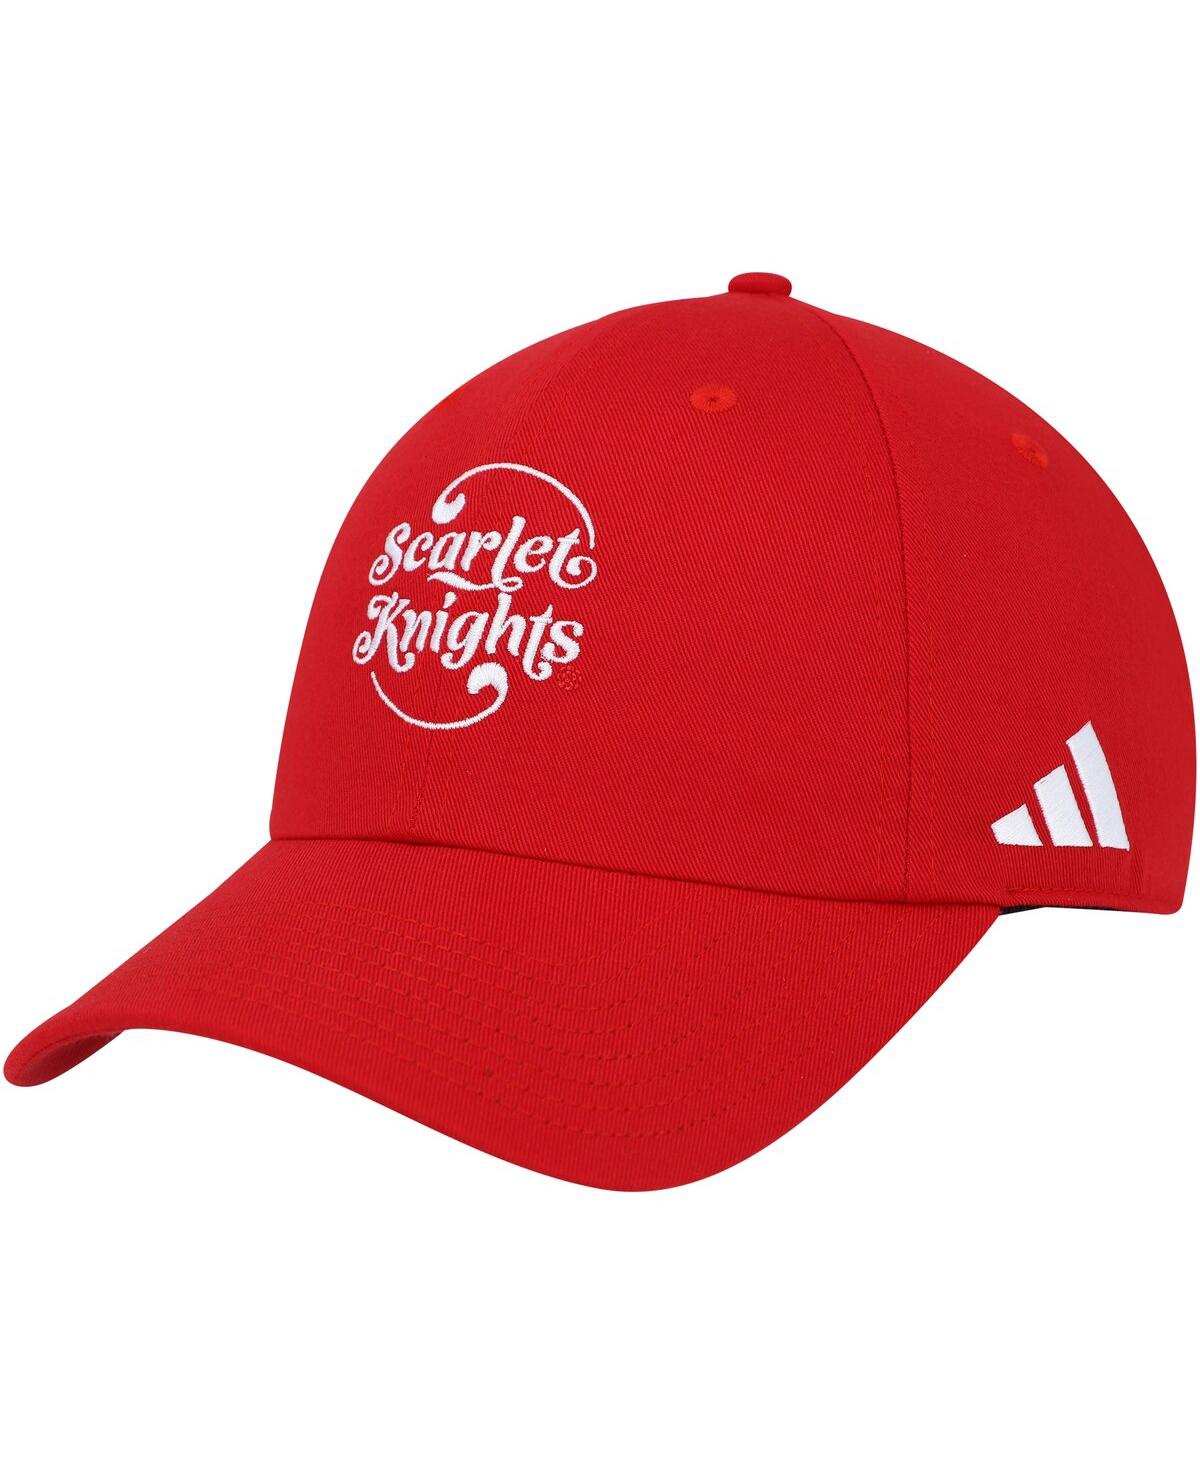 Shop Adidas Originals Men's Adidas Scarlet Rutgers Scarlet Knights Slouch Adjustable Hat